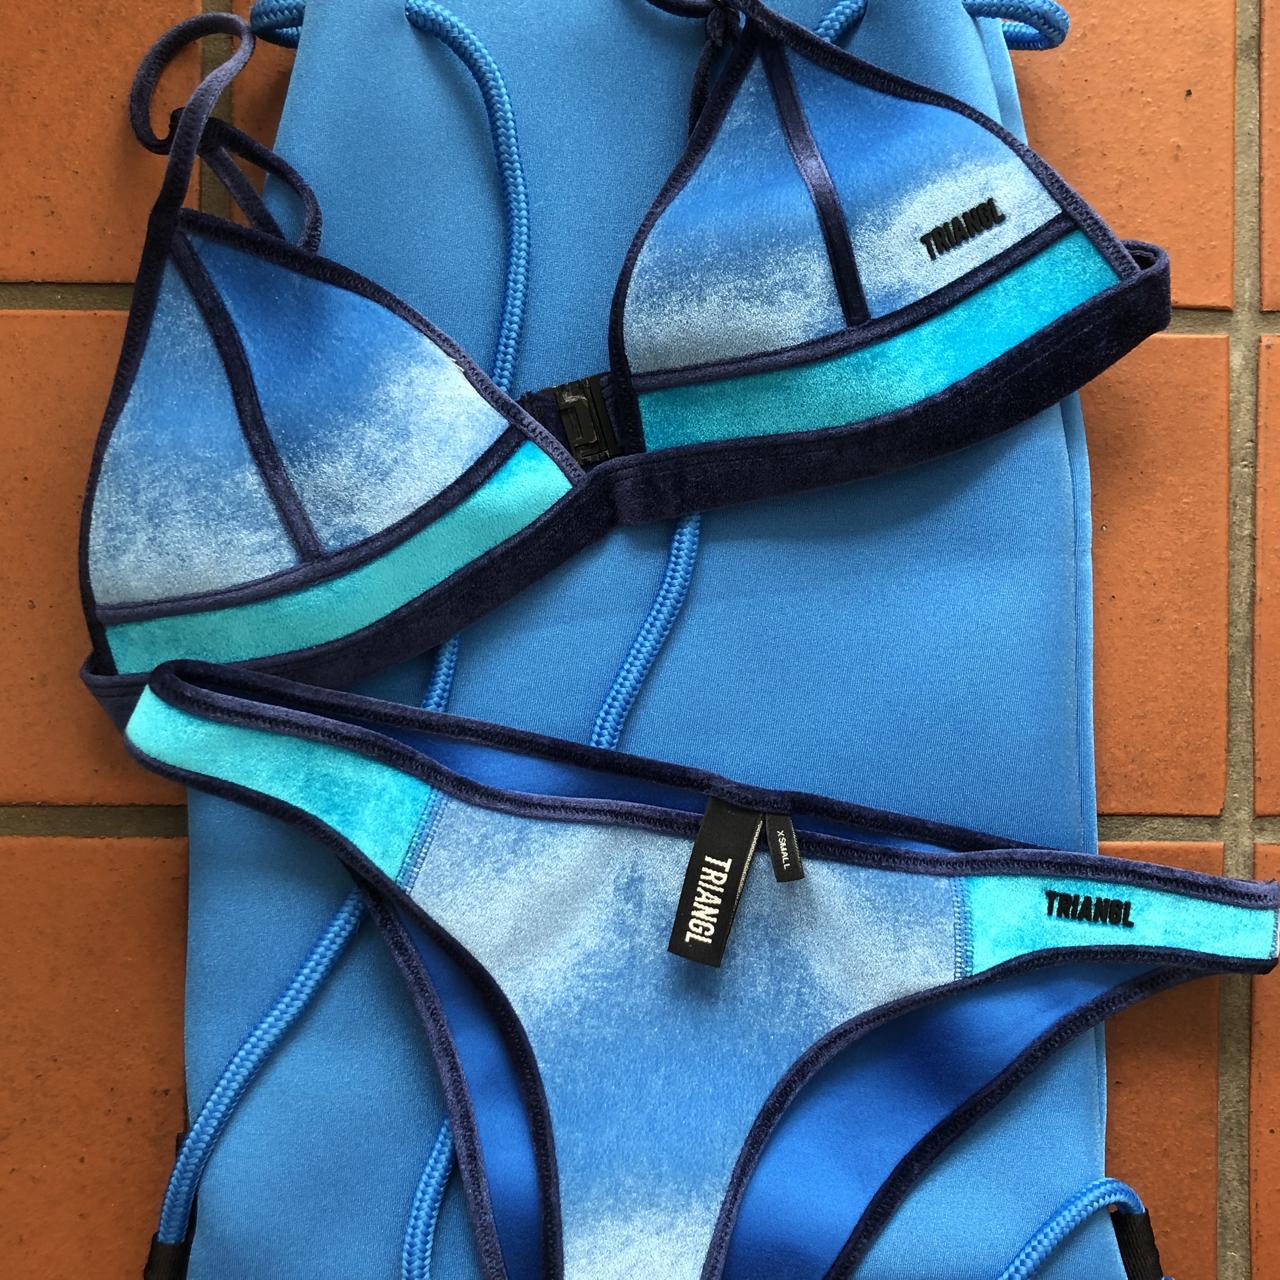 Triangl Bathing Suits - Bloomingdale's